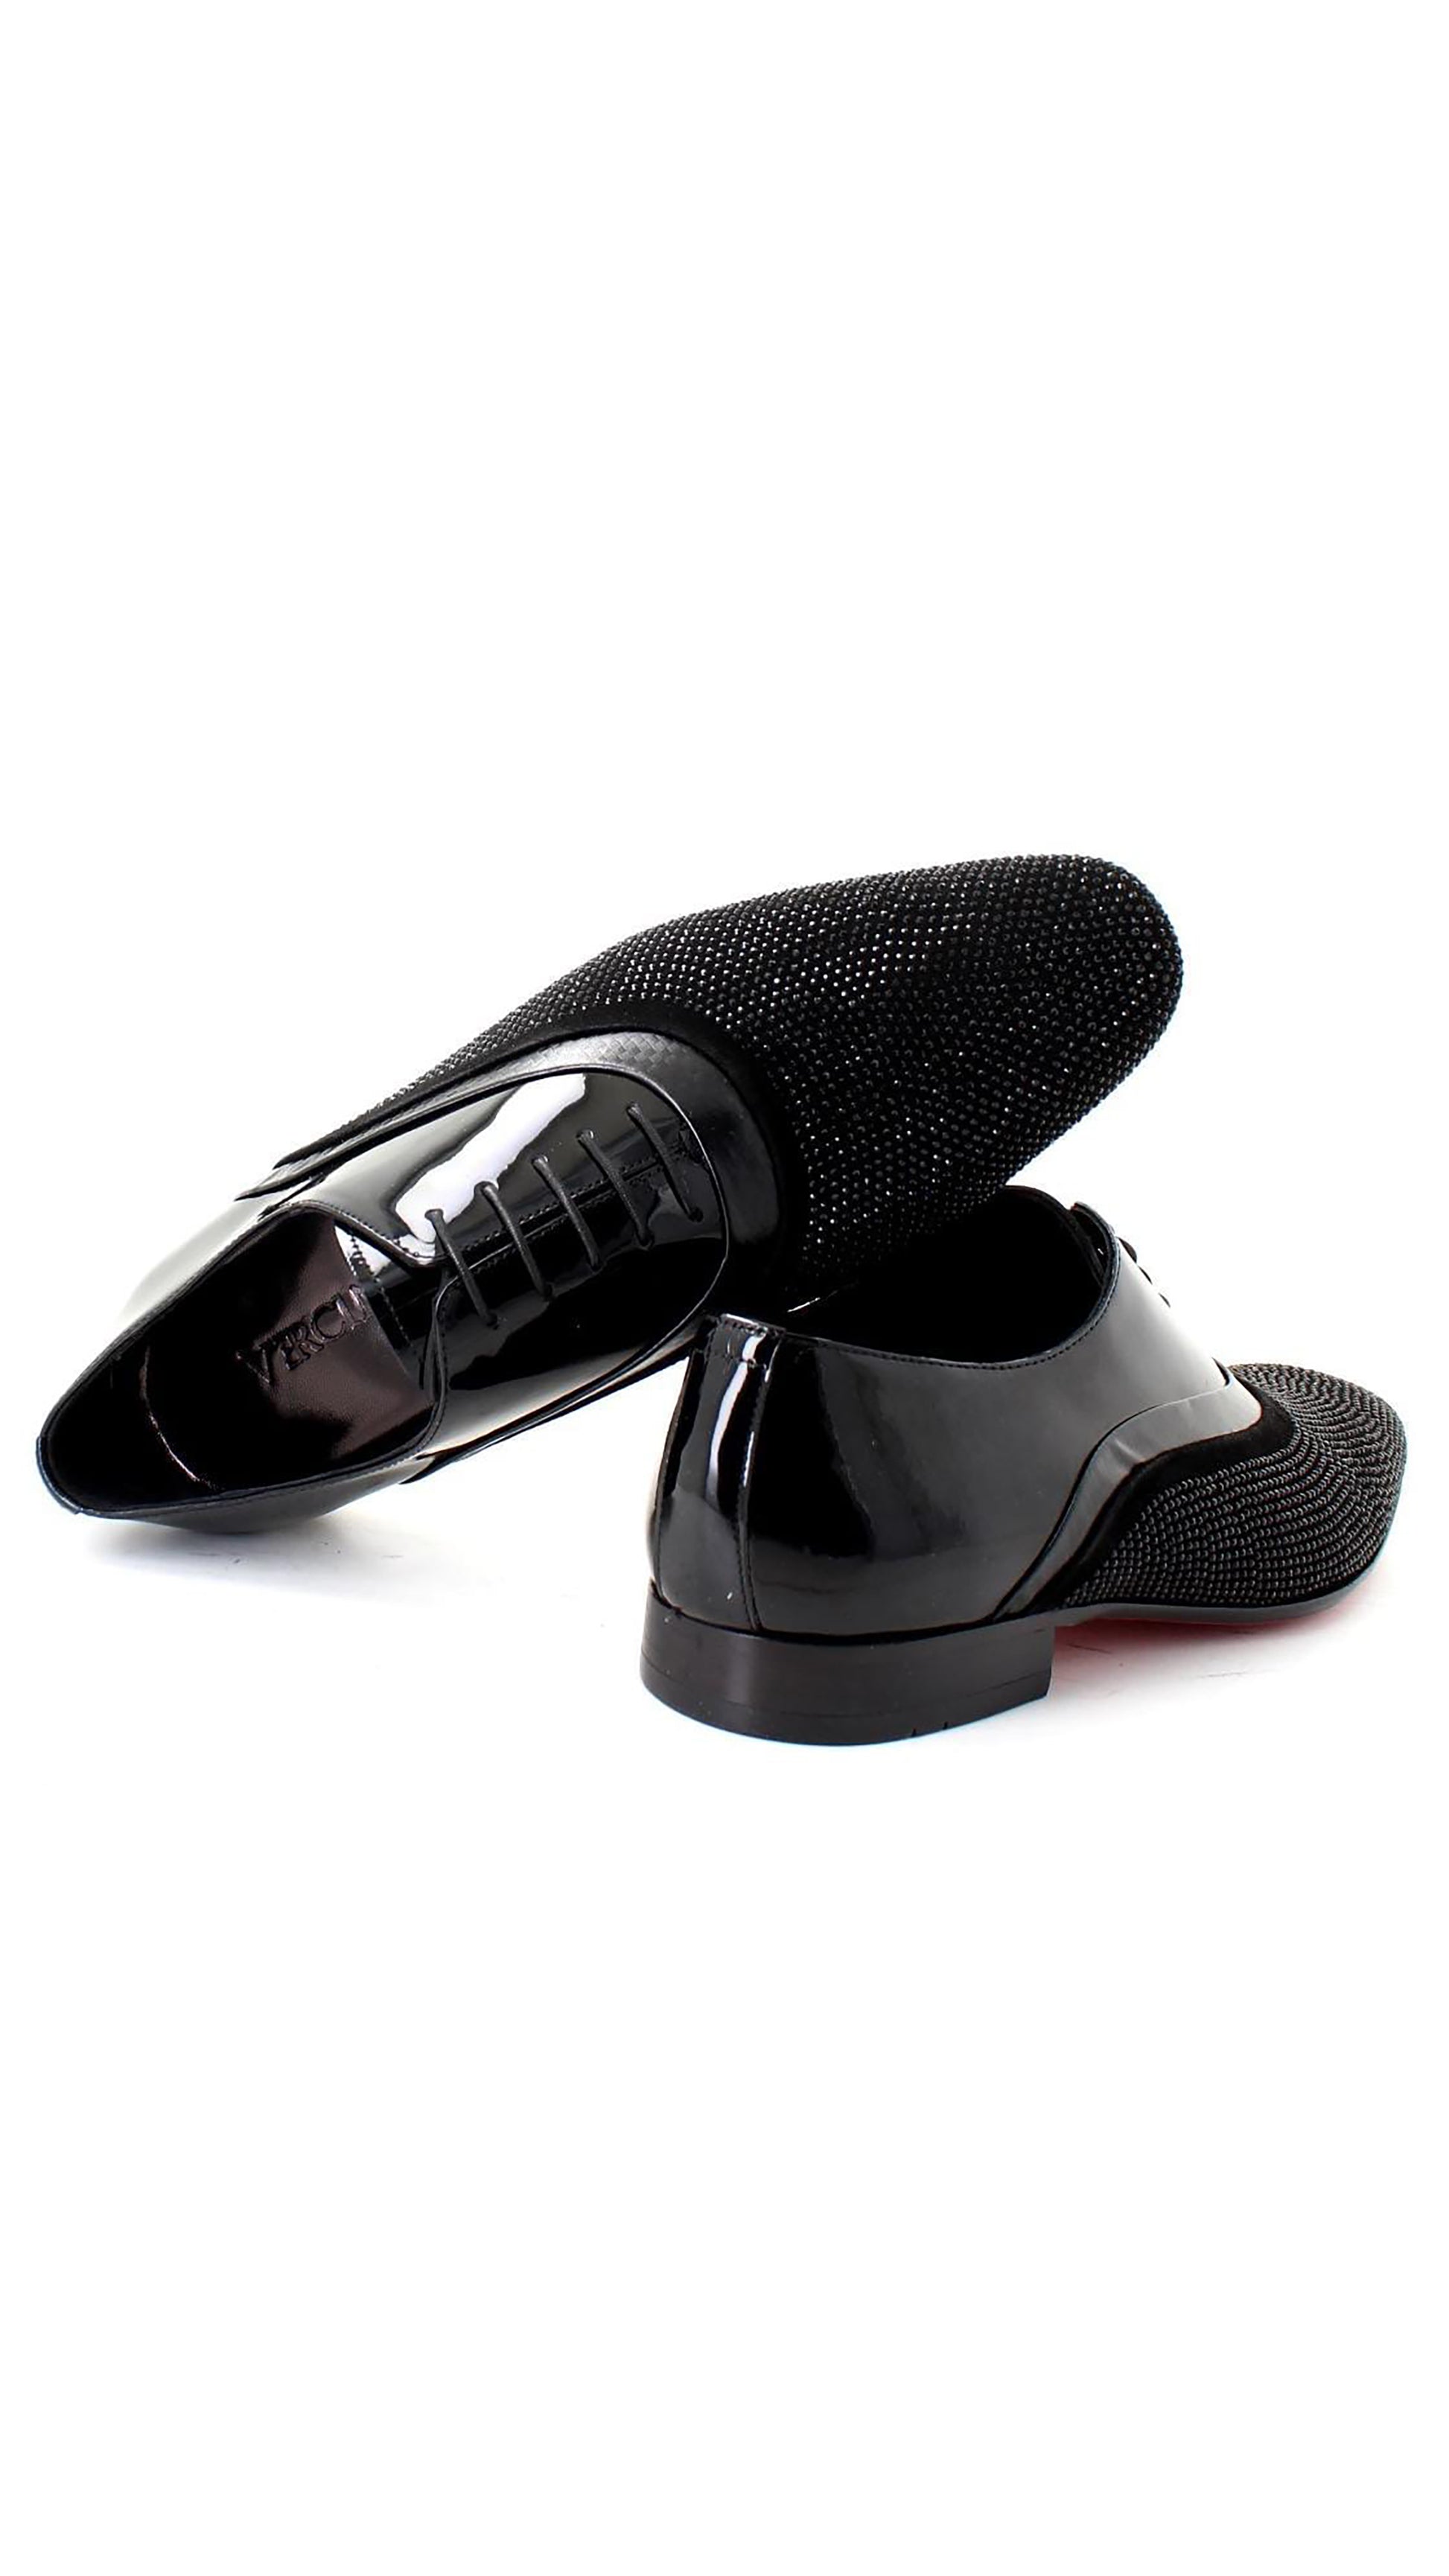 Vercini Starlight Gala Men's Designer Oxfords SHOES Shoe Collection Vercini